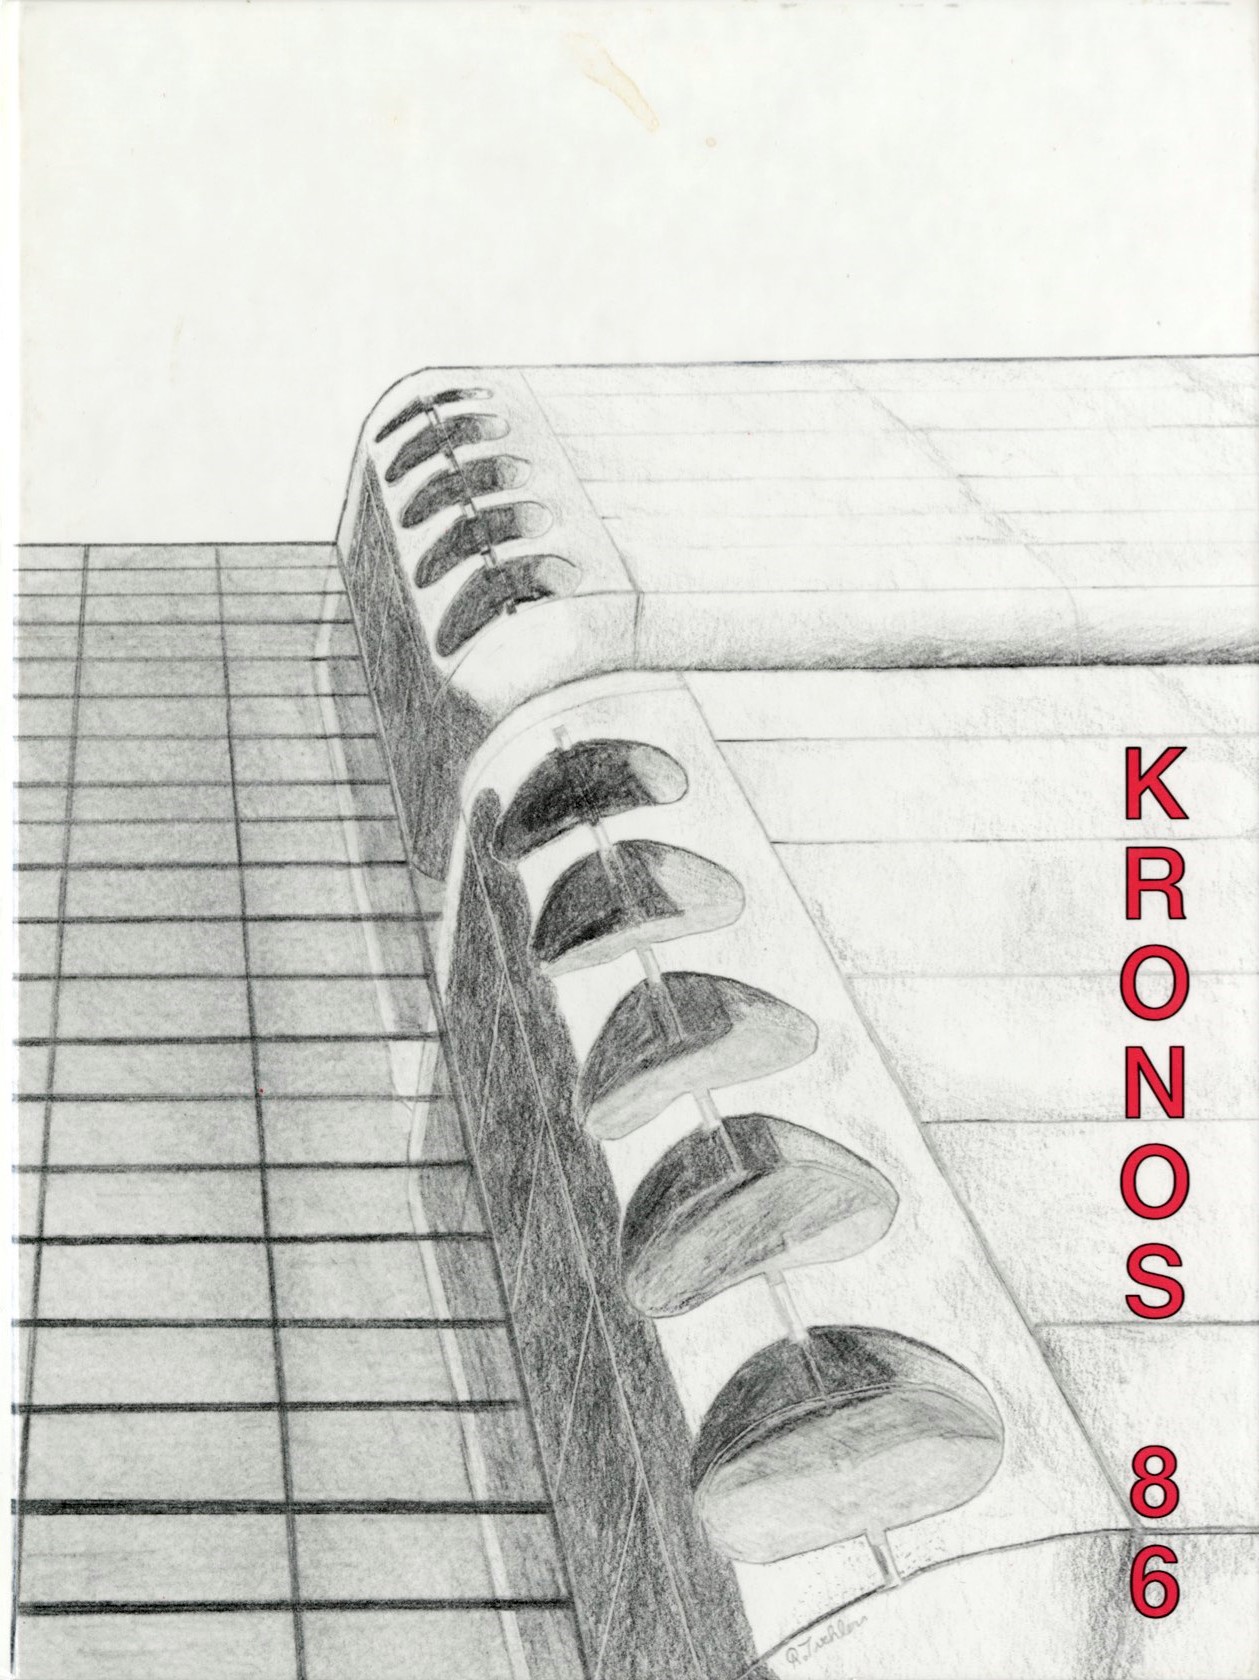 Kronos cover 1986